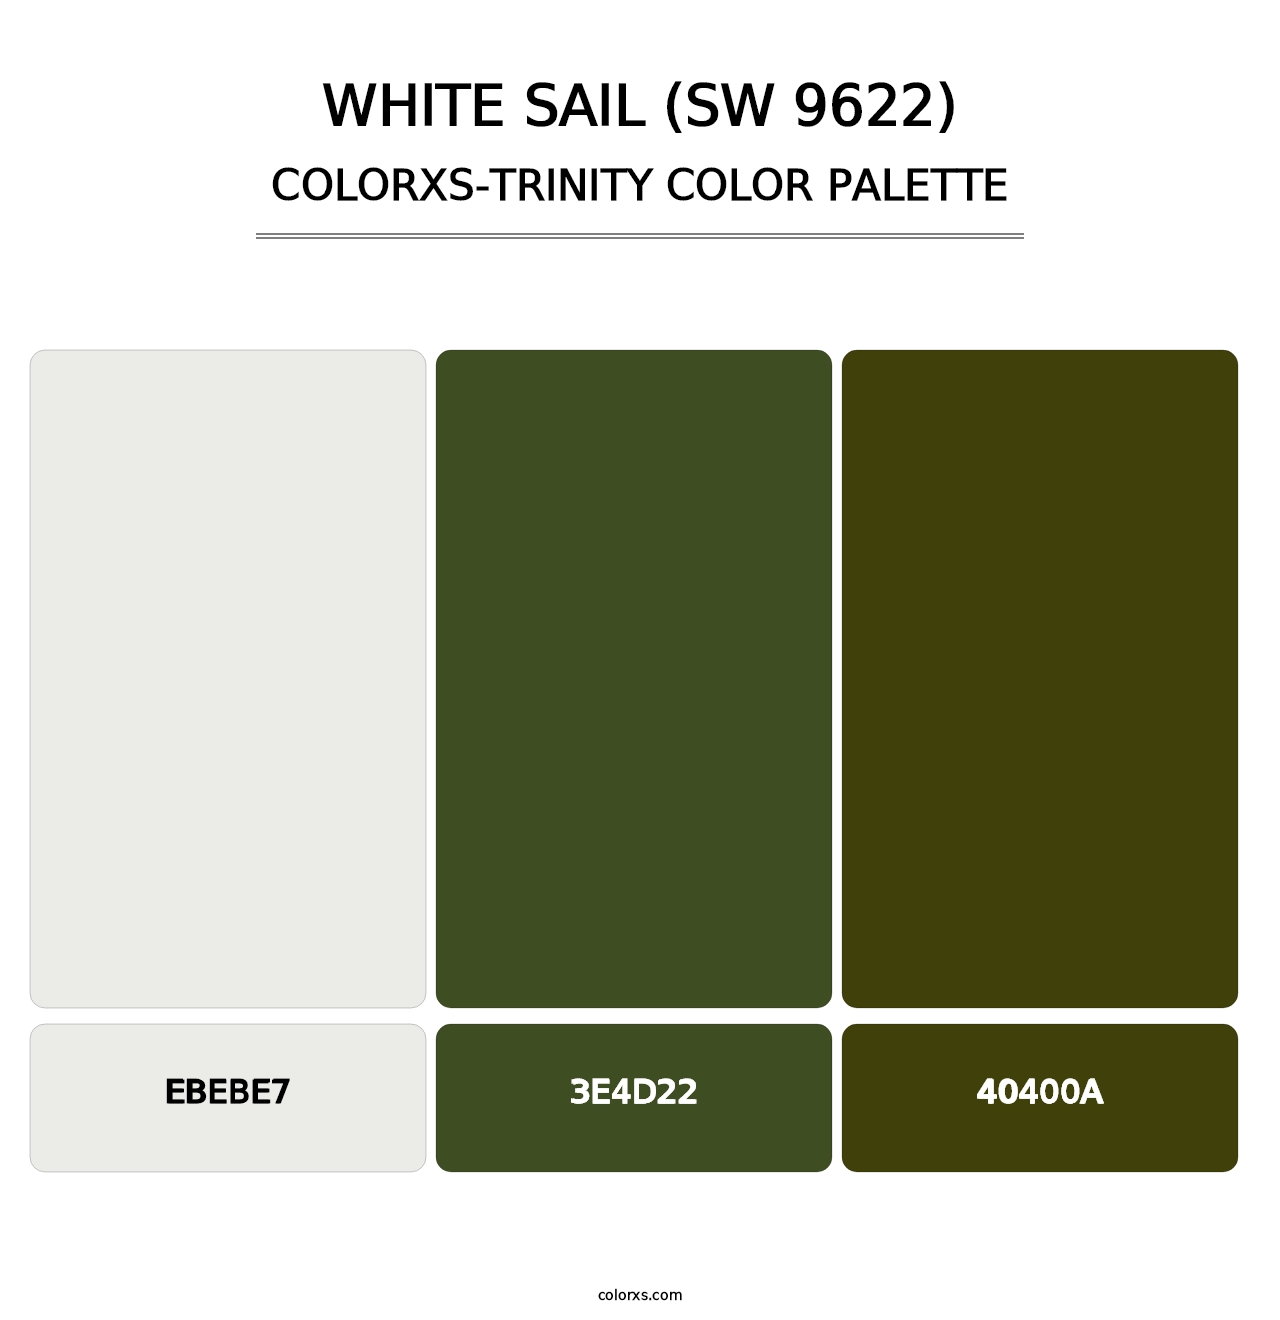 White Sail (SW 9622) - Colorxs Trinity Palette